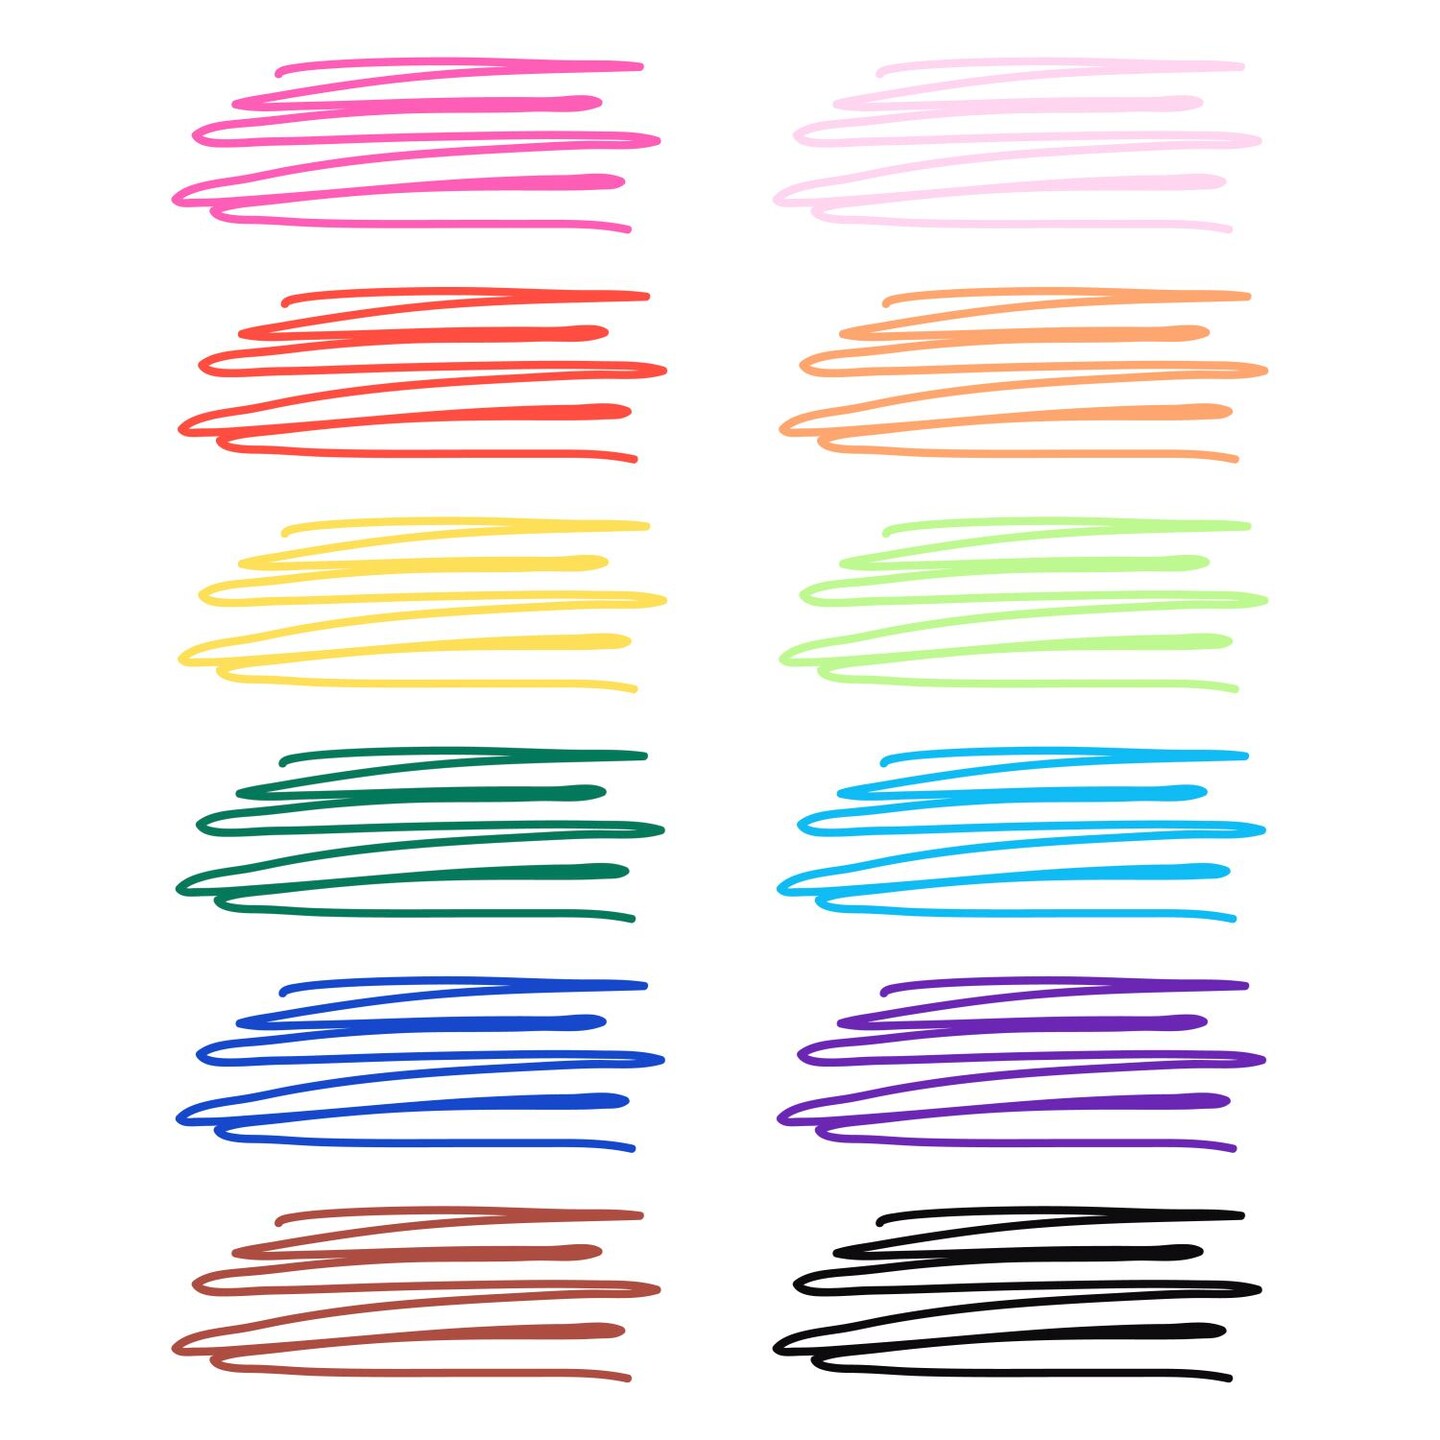 Tulip Fine-Tip Fabric Markers Rainbow 12 Pack